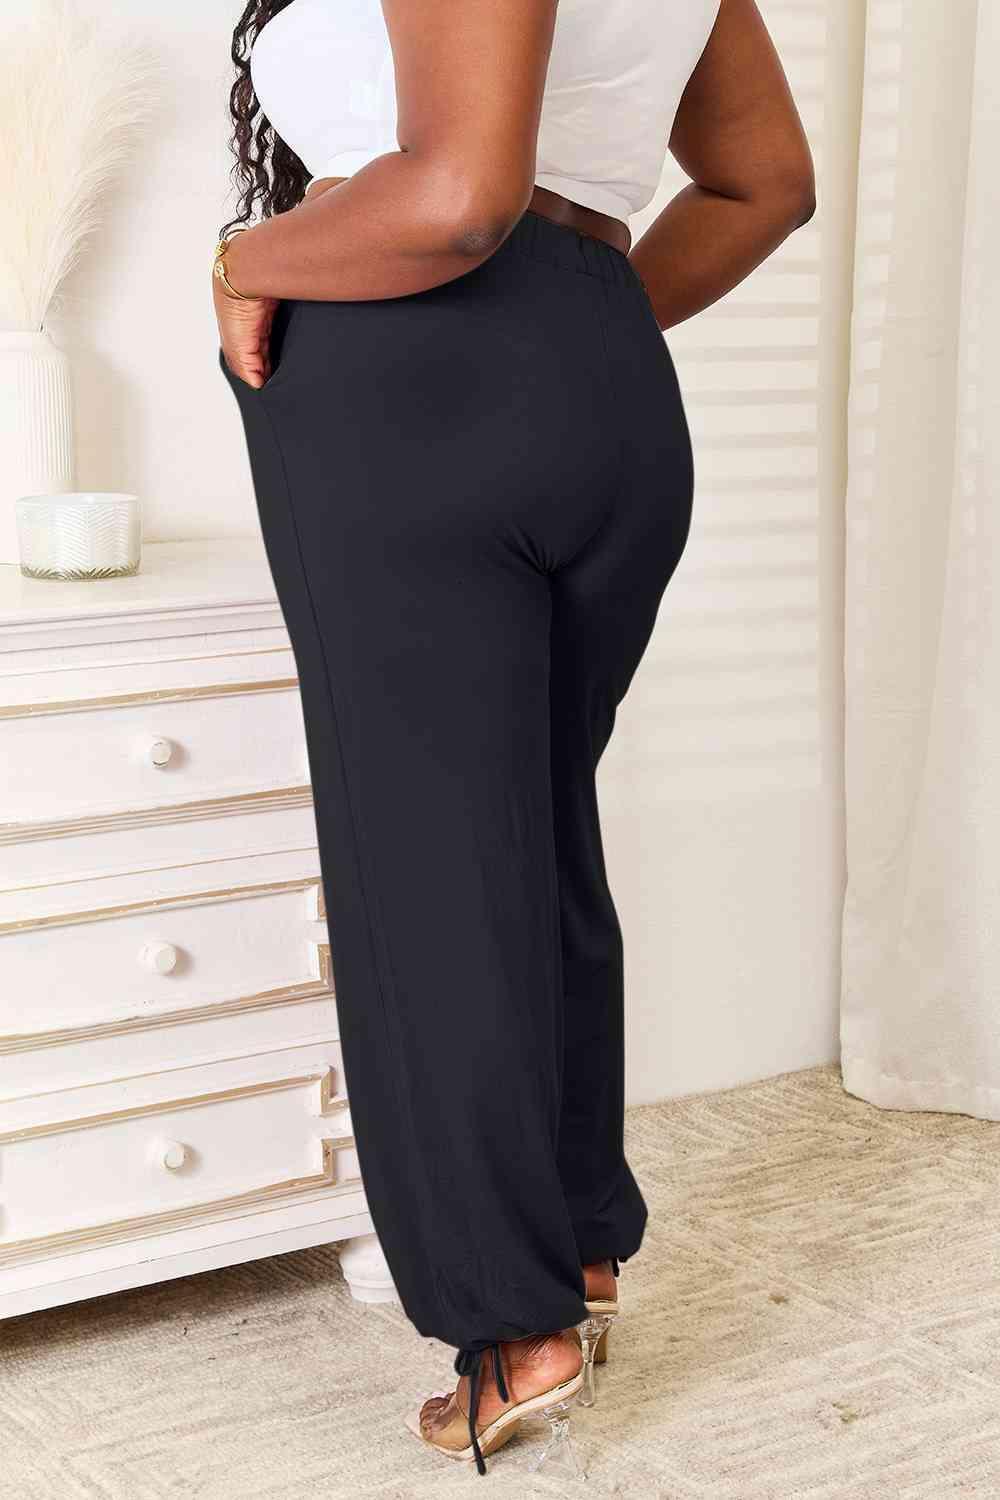 Orderly Women's Plus Size Drawstring Pants - MXSTUDIO.COM